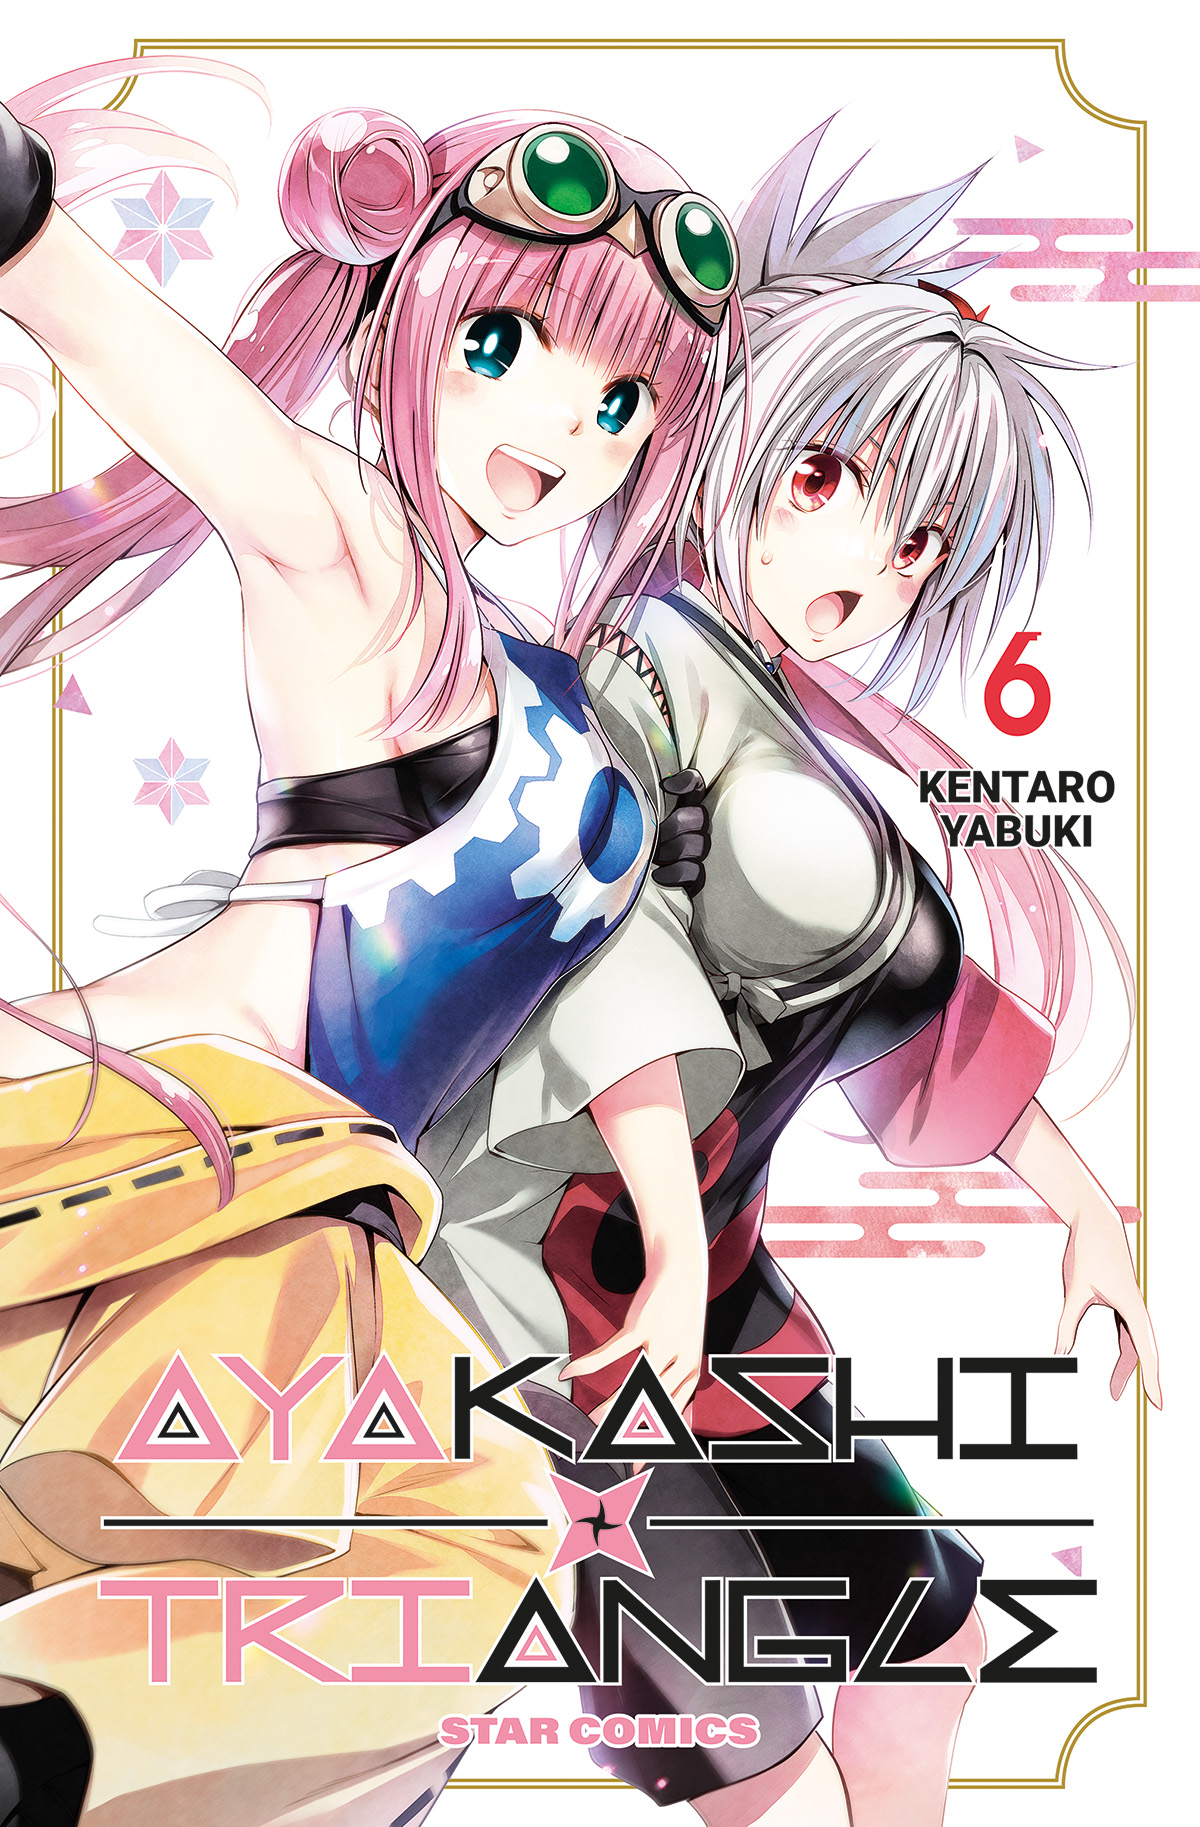 Manga – Star Comics – Ayakashi Triangle #6